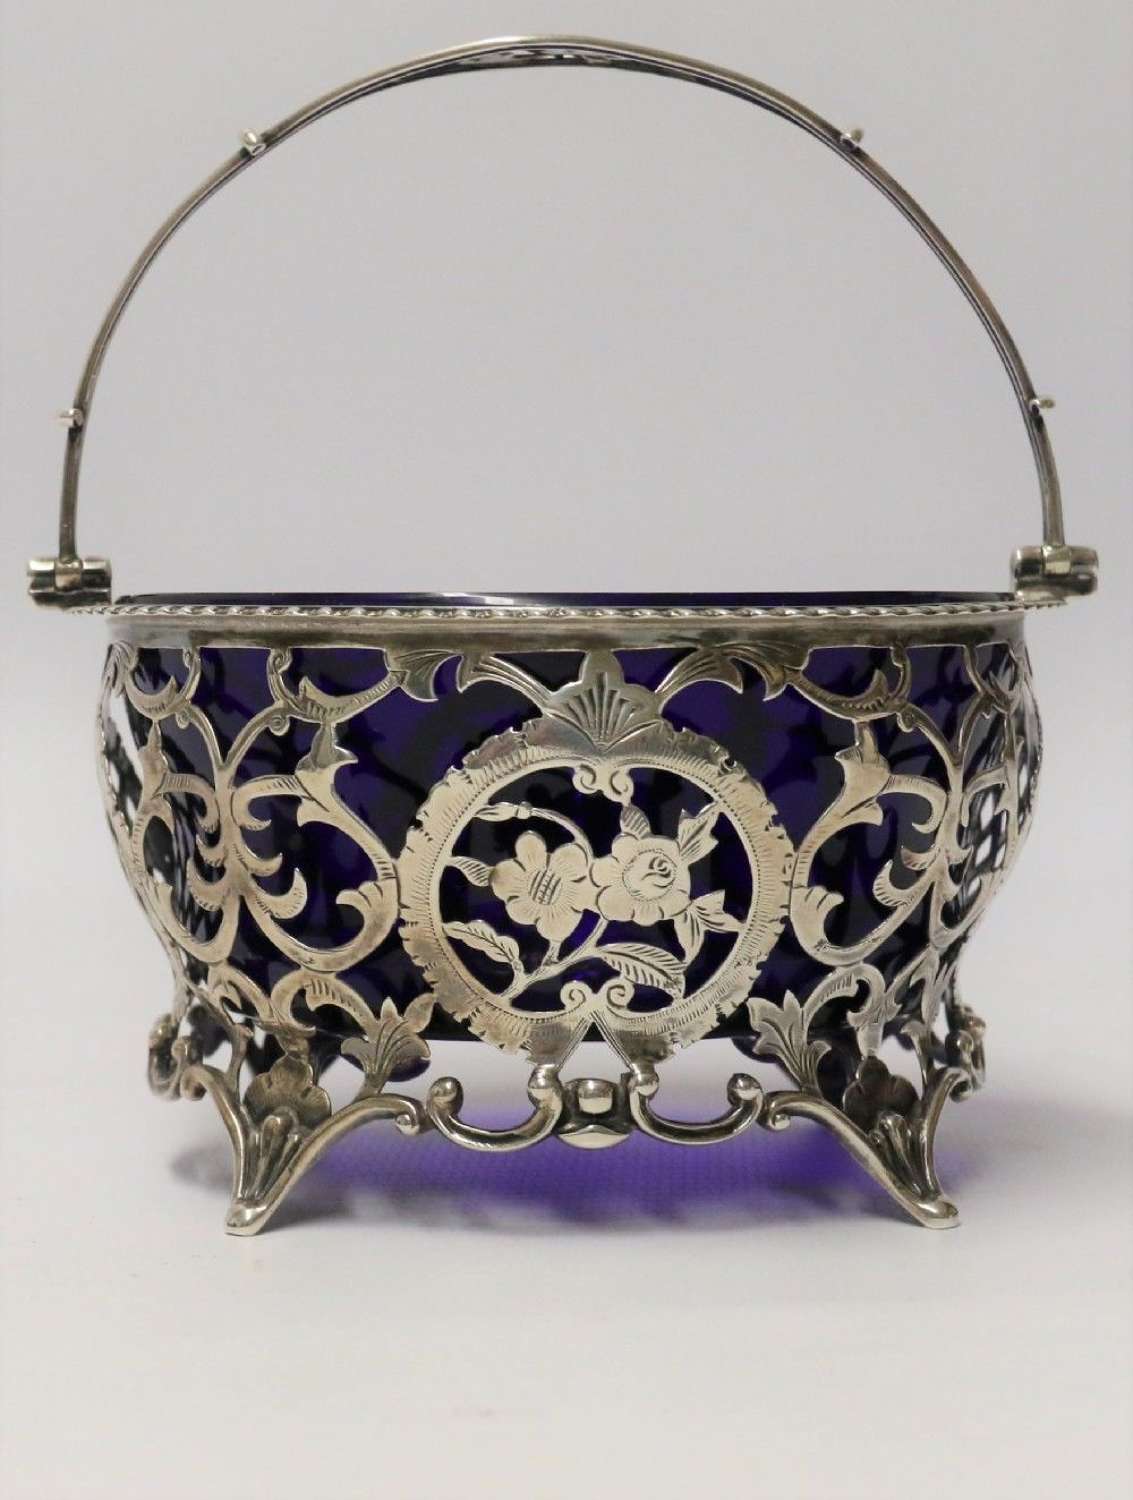 Edwardian period silver sugar basket with original blue glass liner